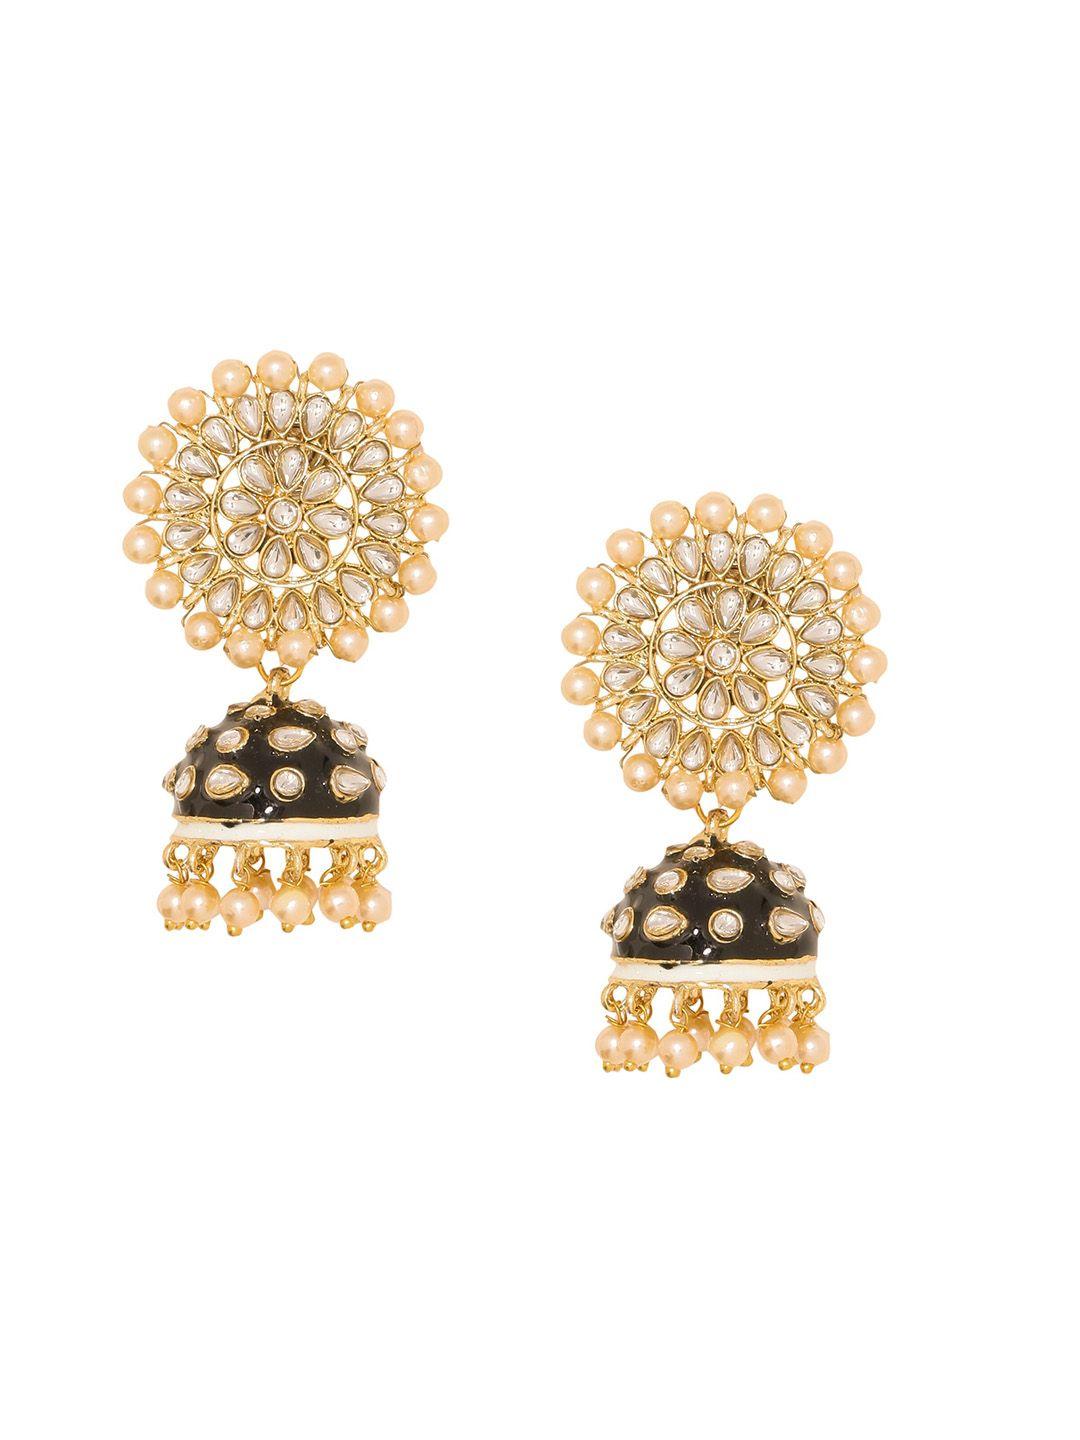 sanjog gold-toned classic jhumkas earrings